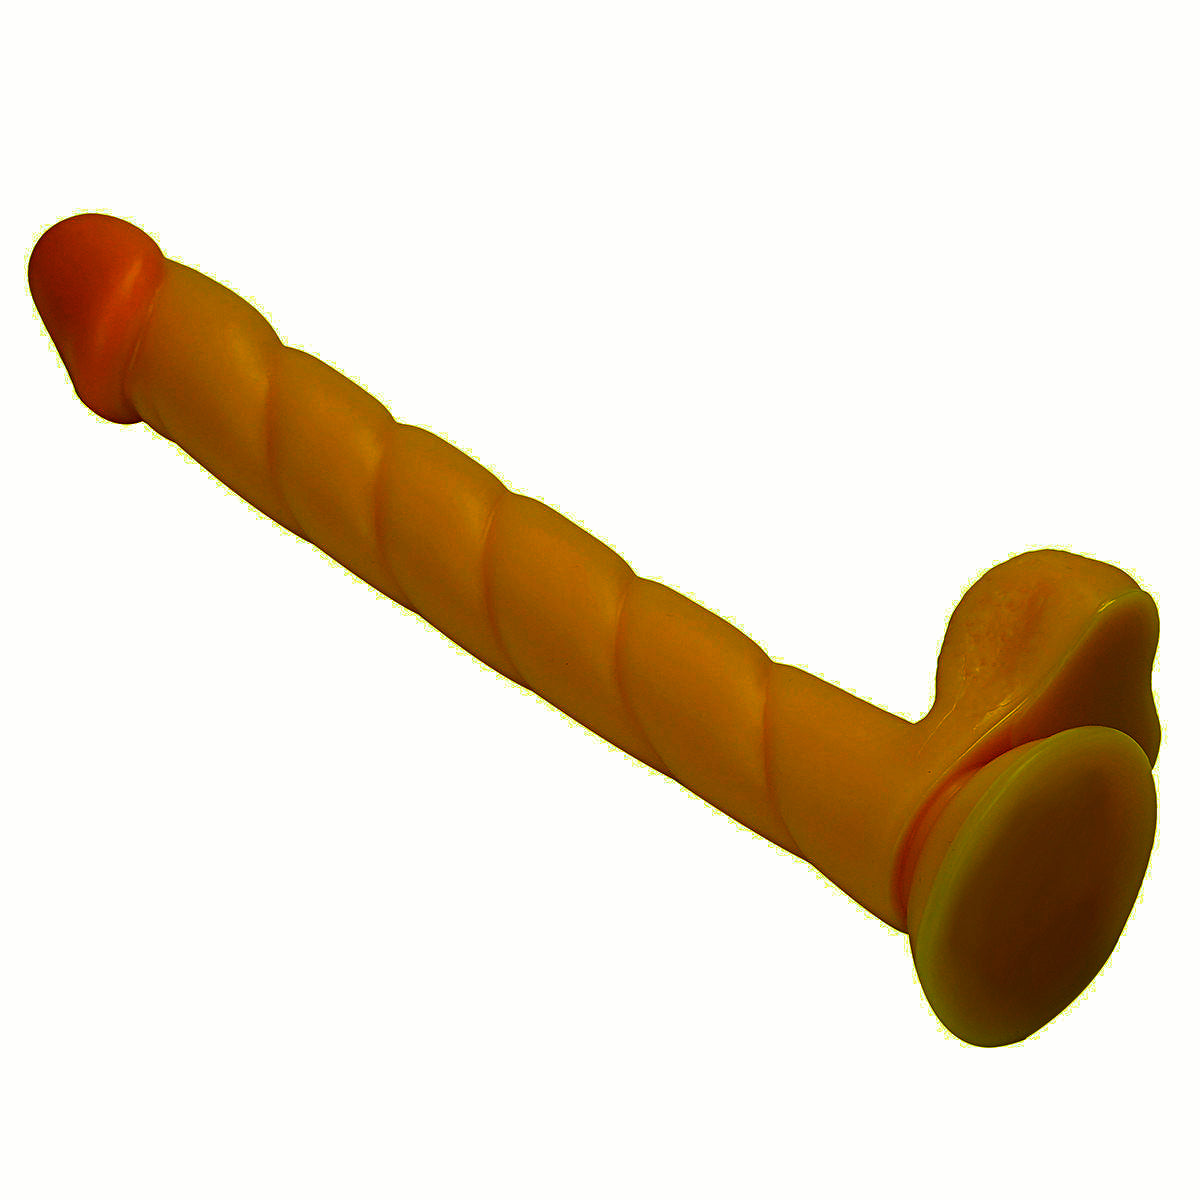 12inch Realistic Long Dildo - Long Dick Penis Sex Toys for Women - Dark Brown